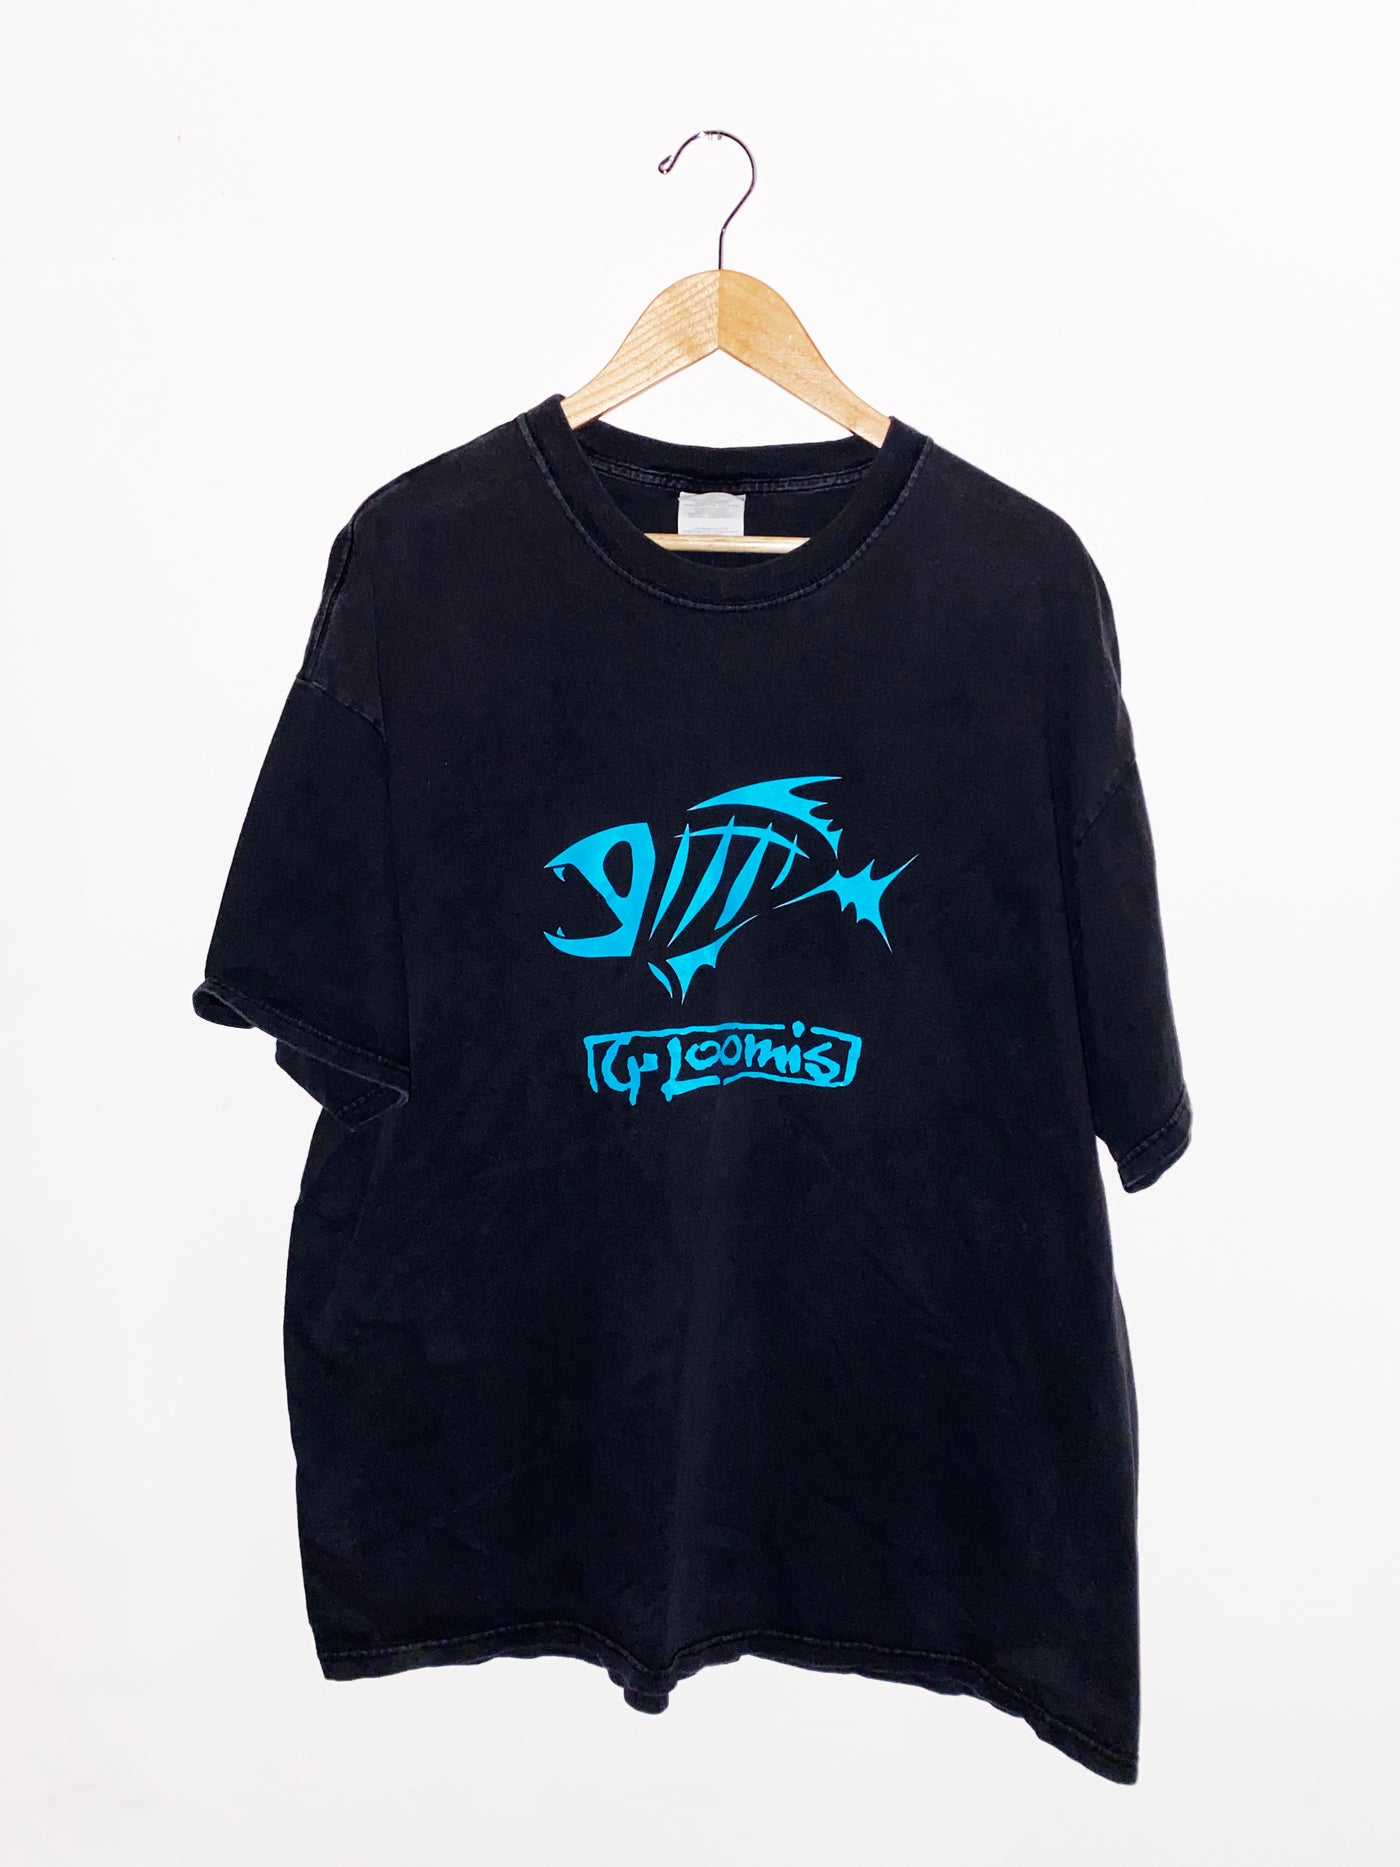 Vintage G-Loomis Fishing T-Shirt